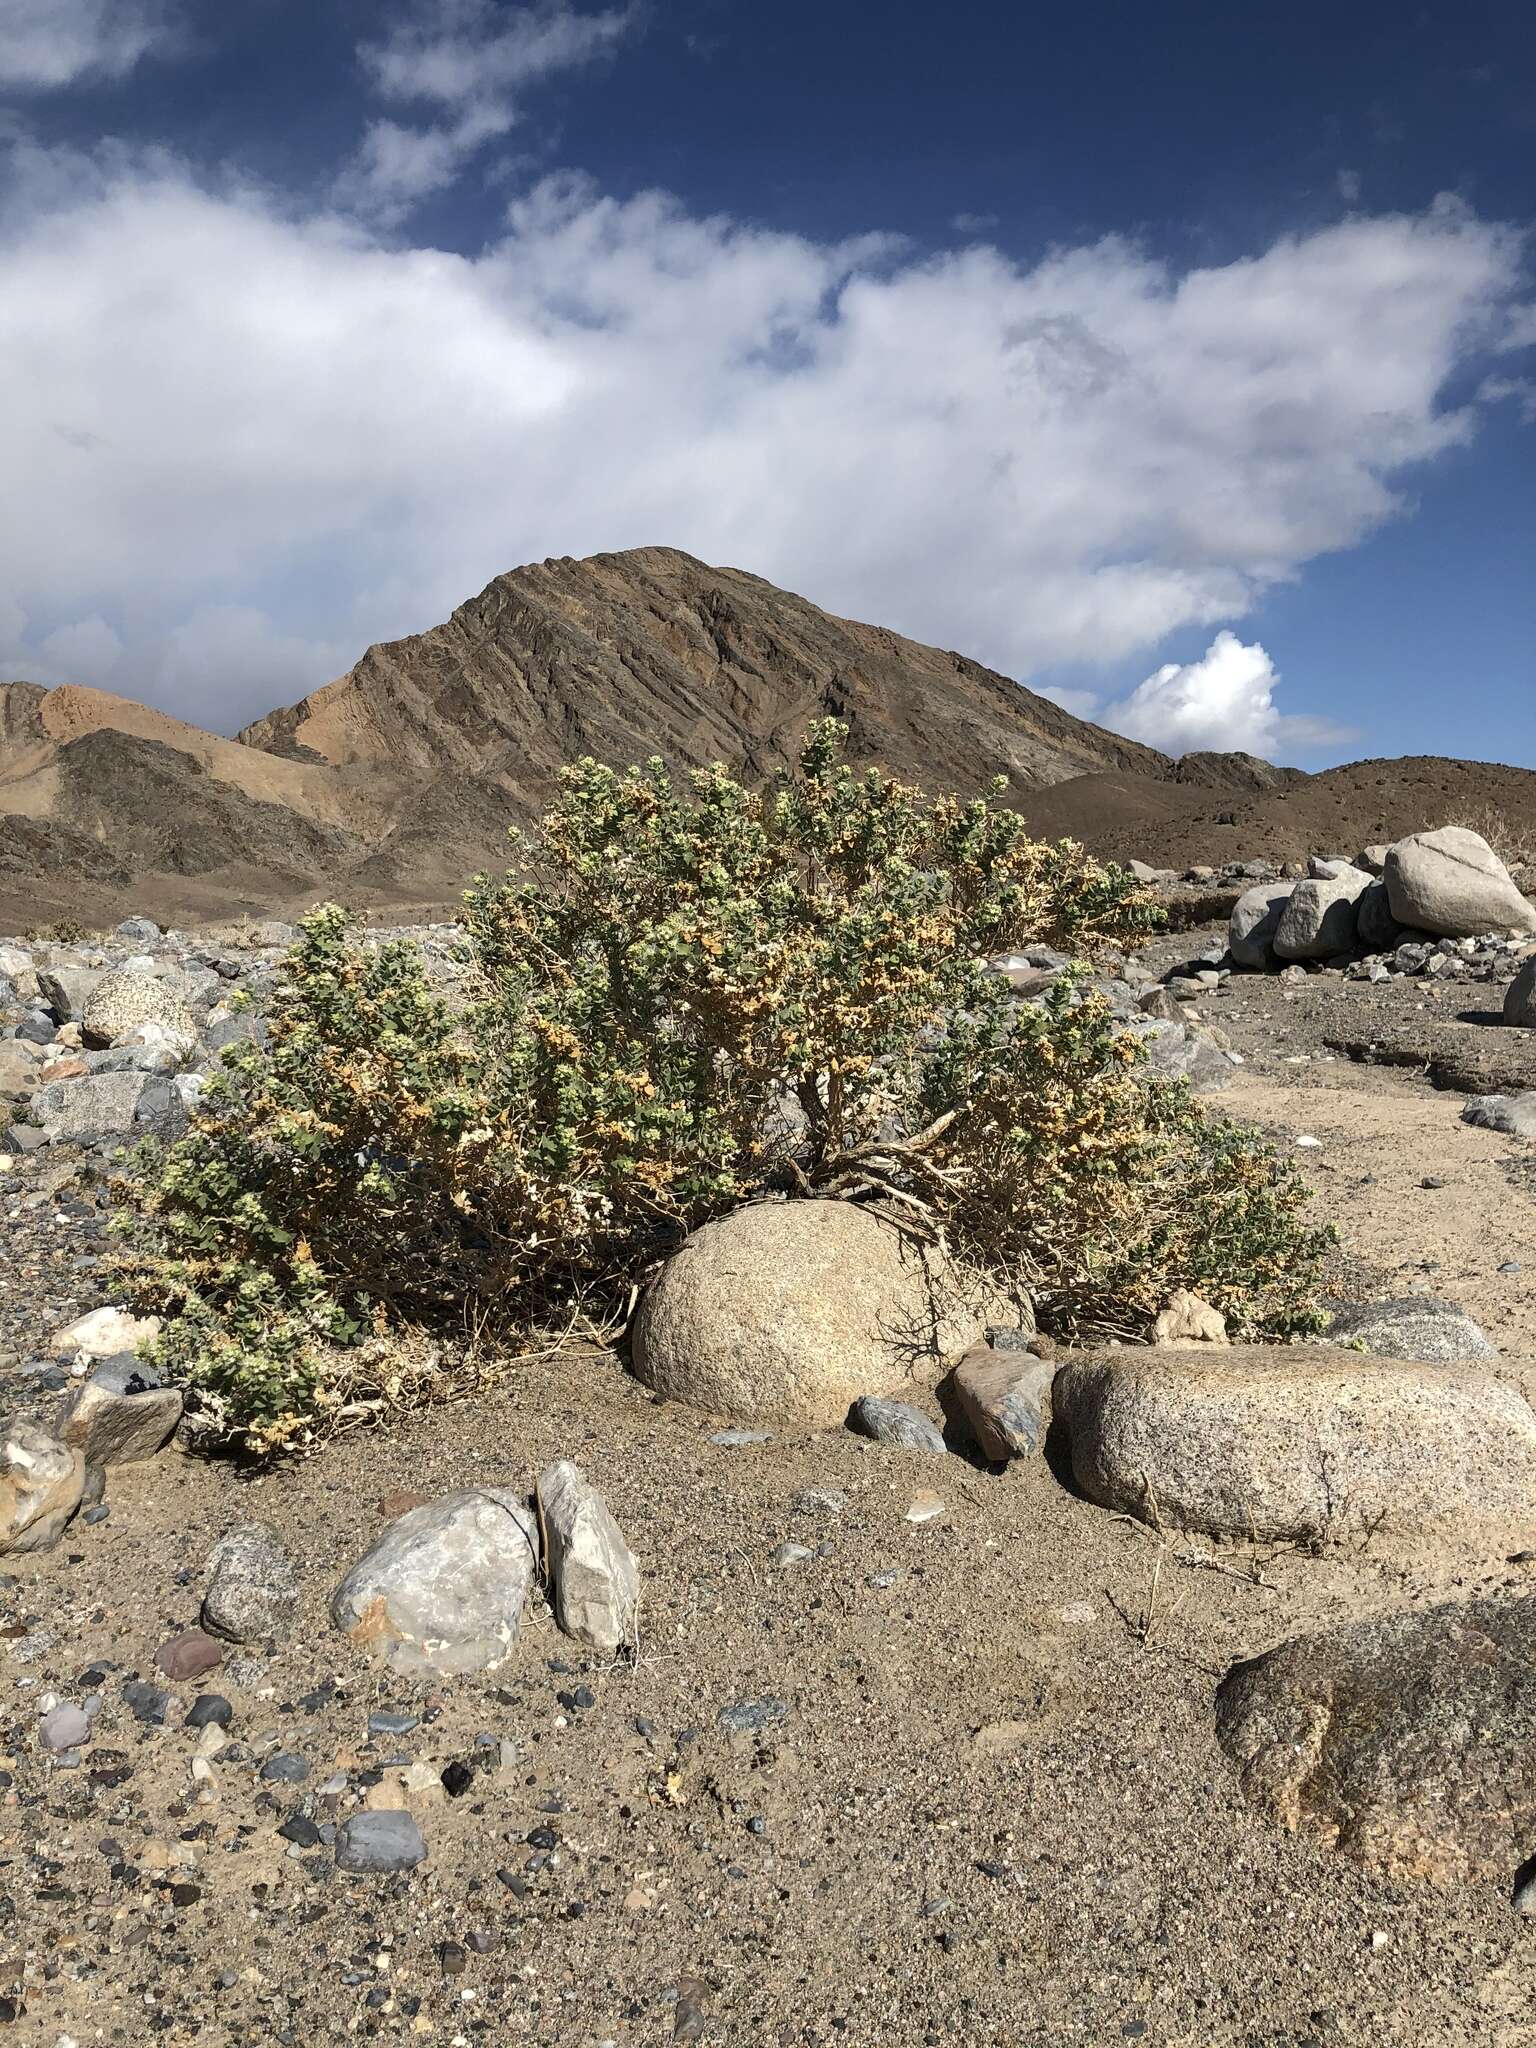 Image of Death Valley sandpaper plant